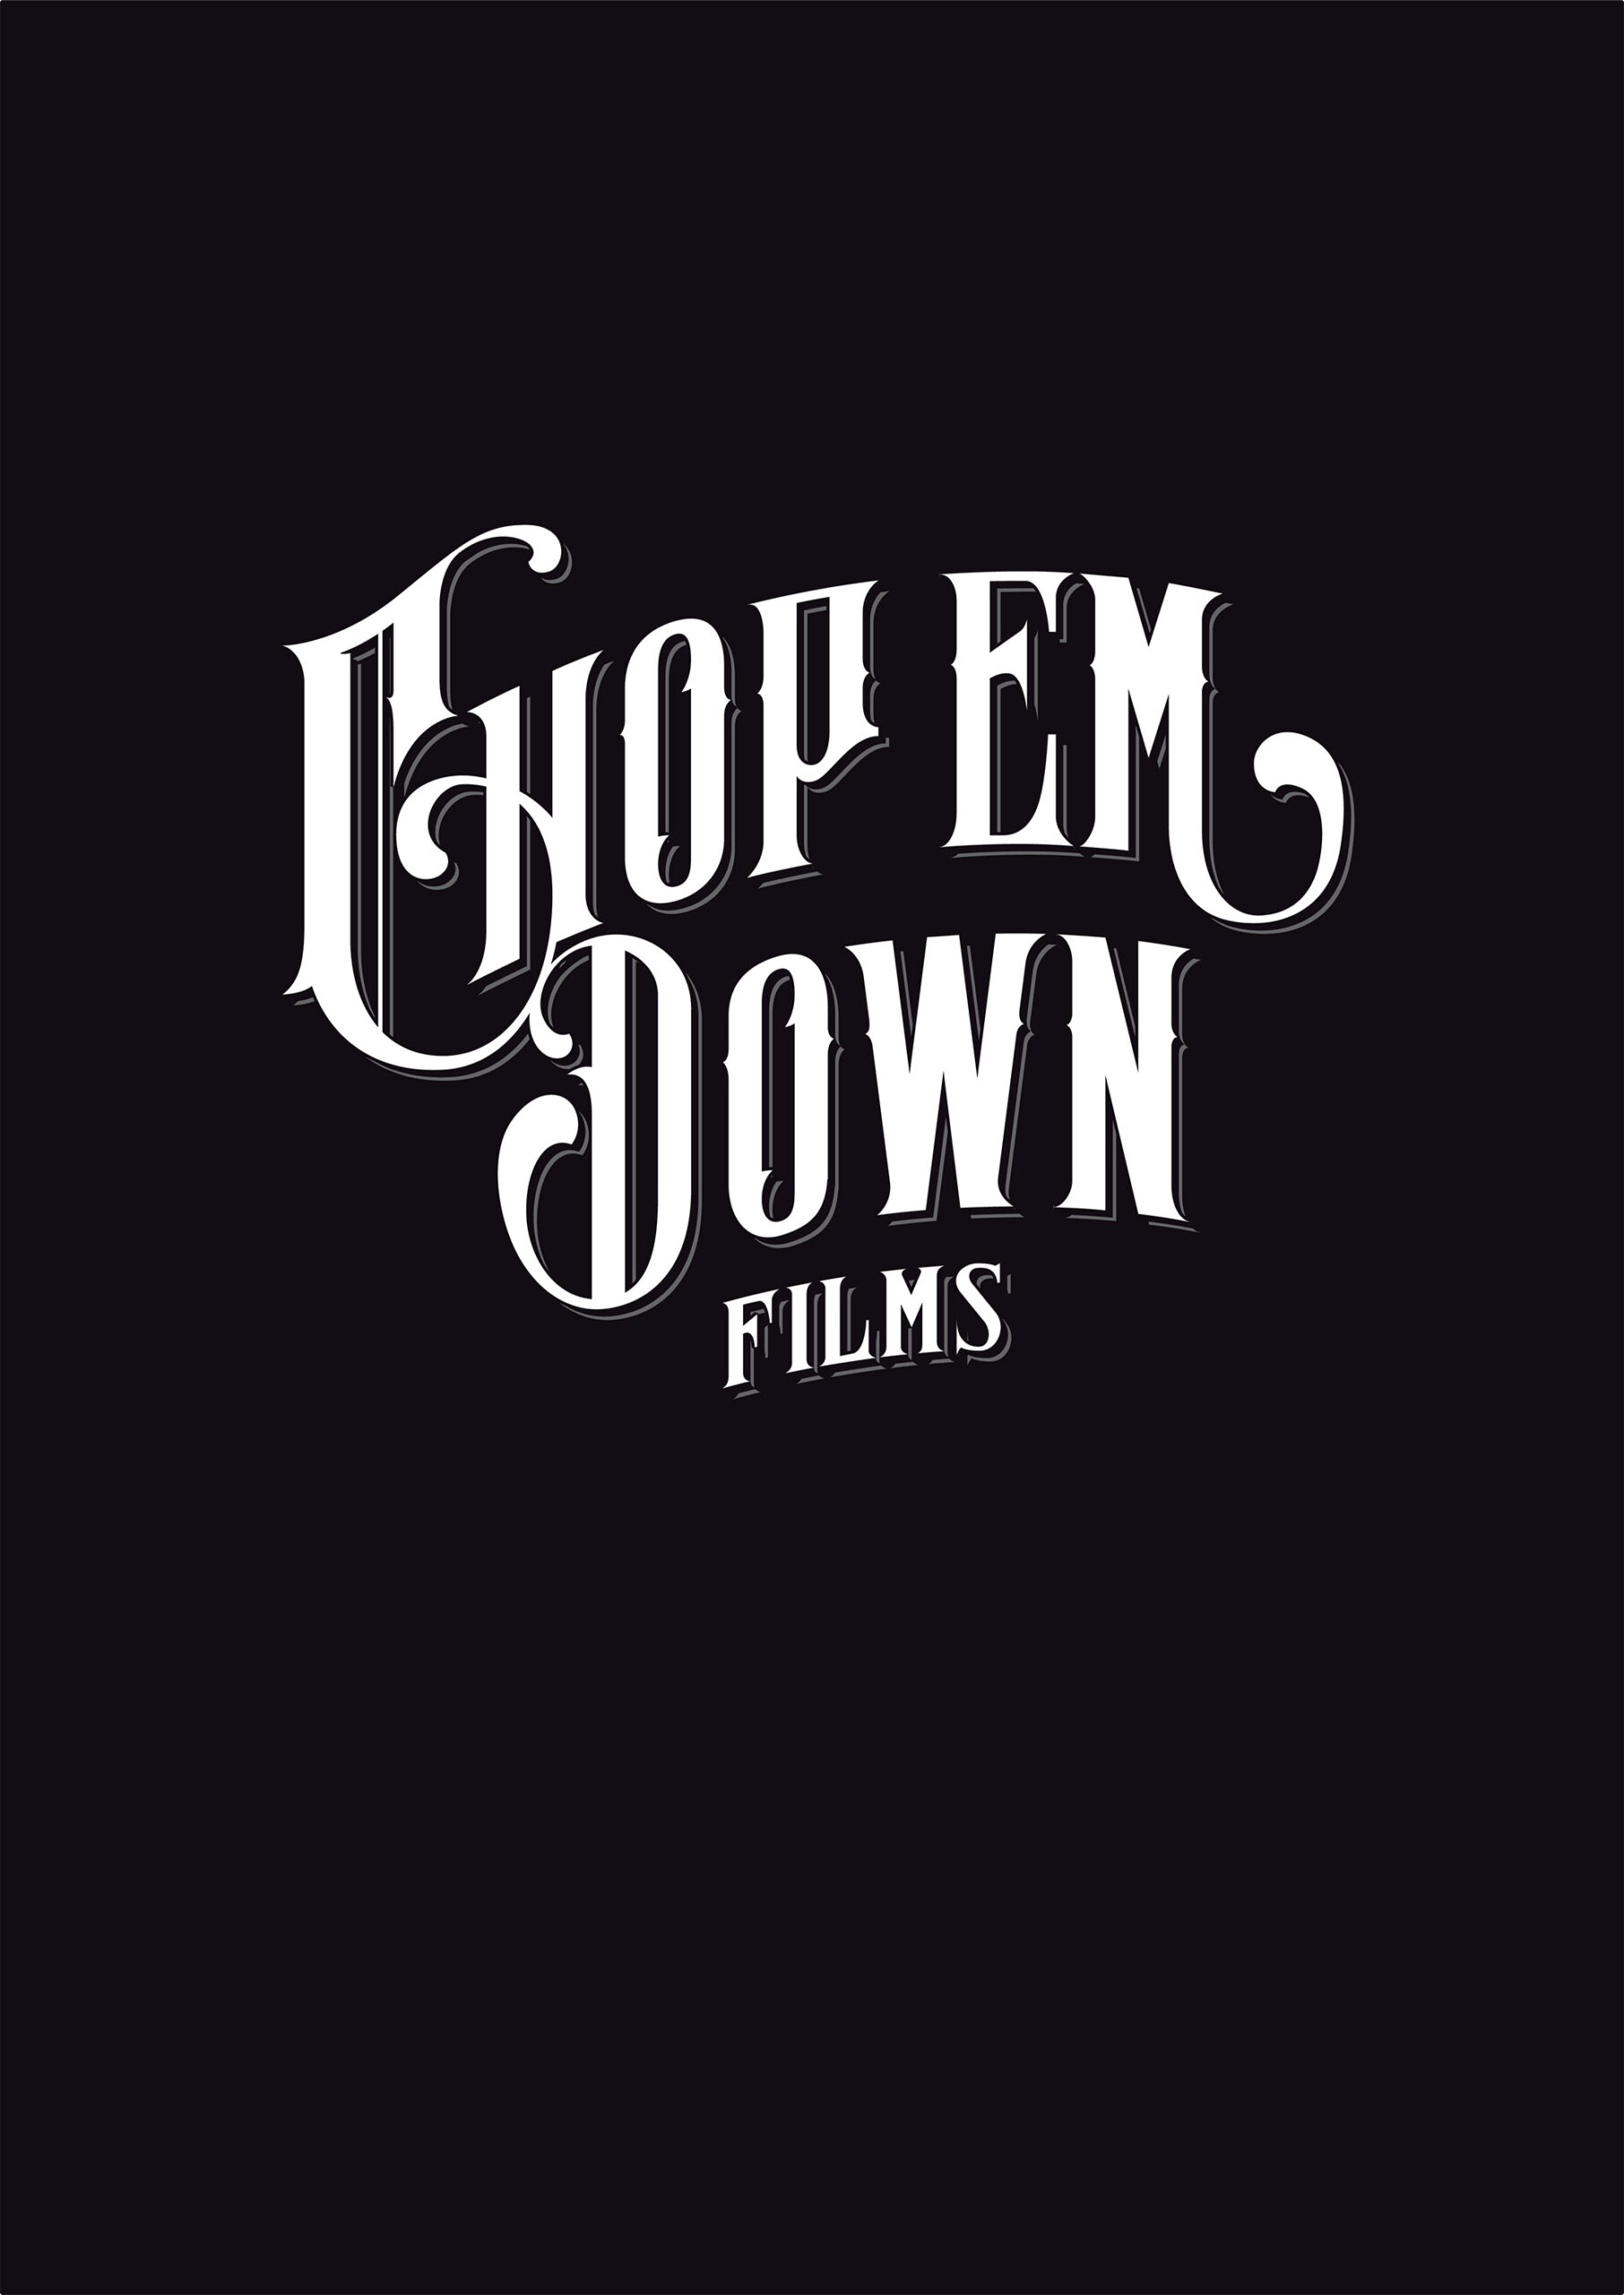 Chop Em Down Films